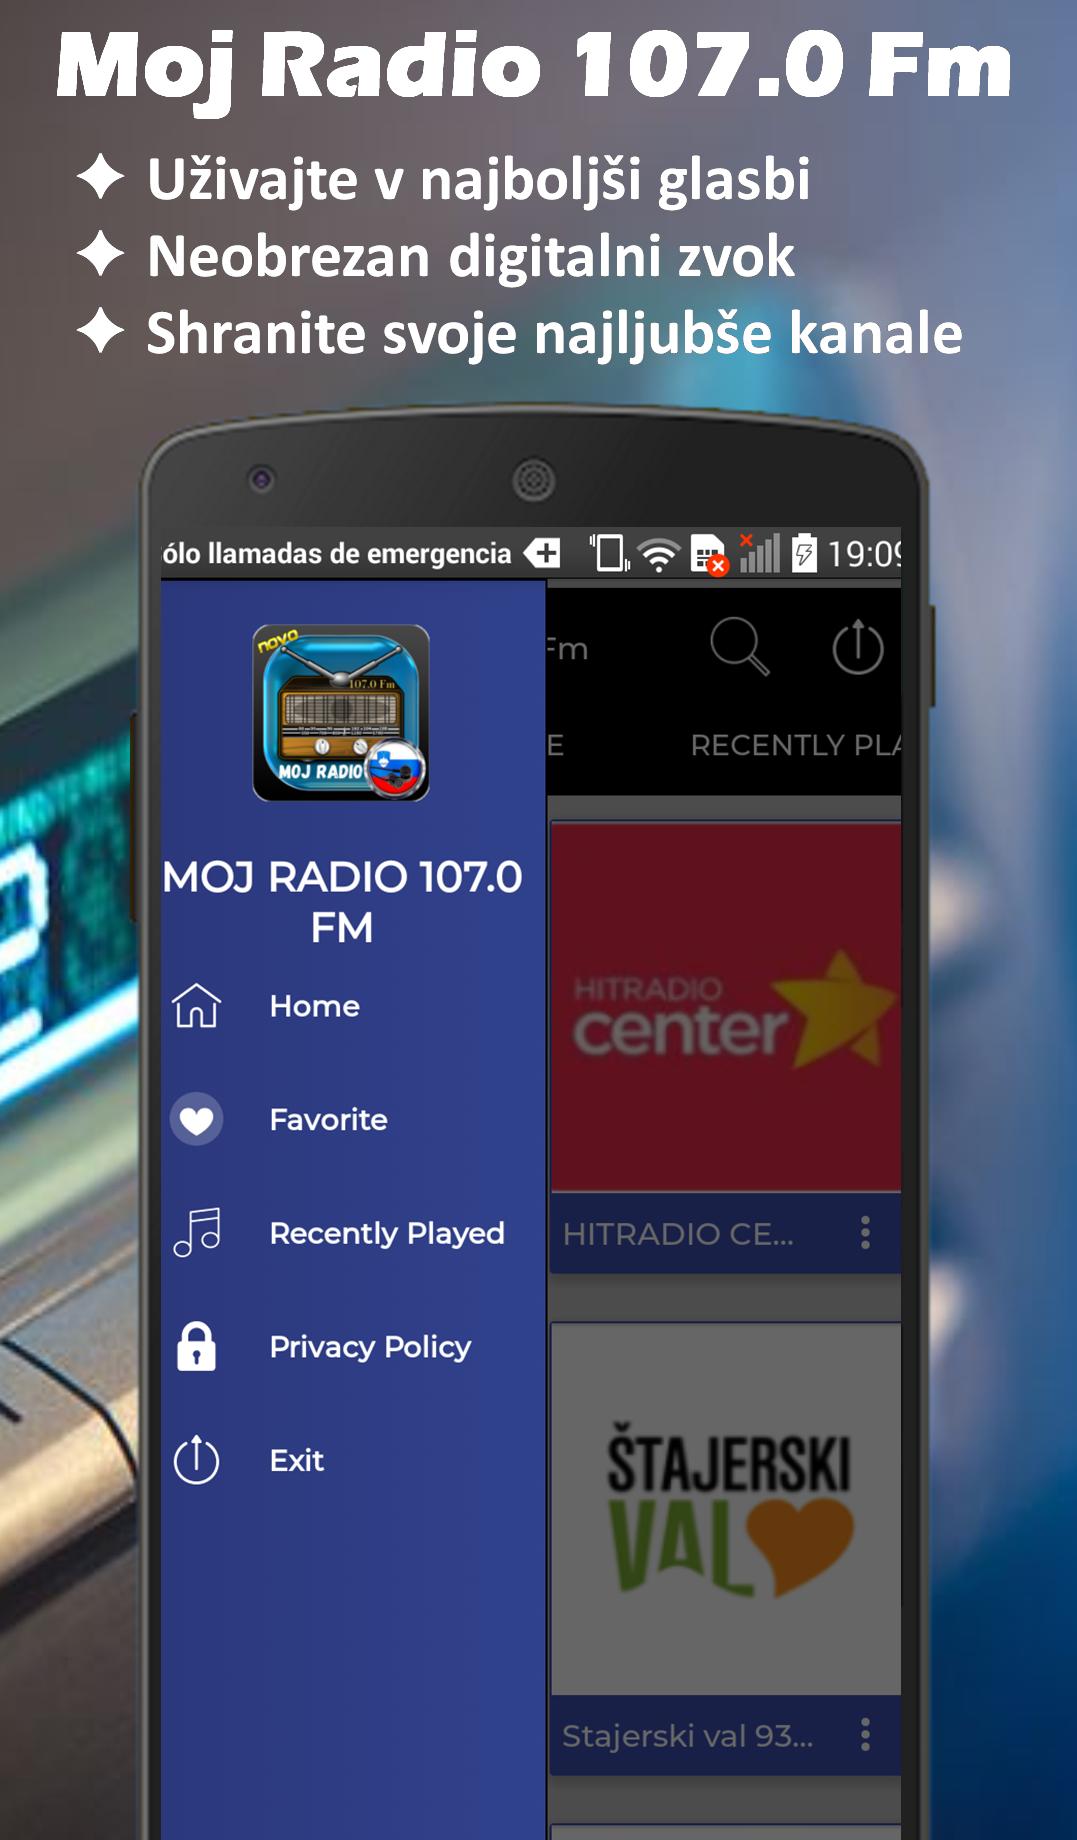 Moj Radio 107.0 Fm SLOVENIA for Android - APK Download